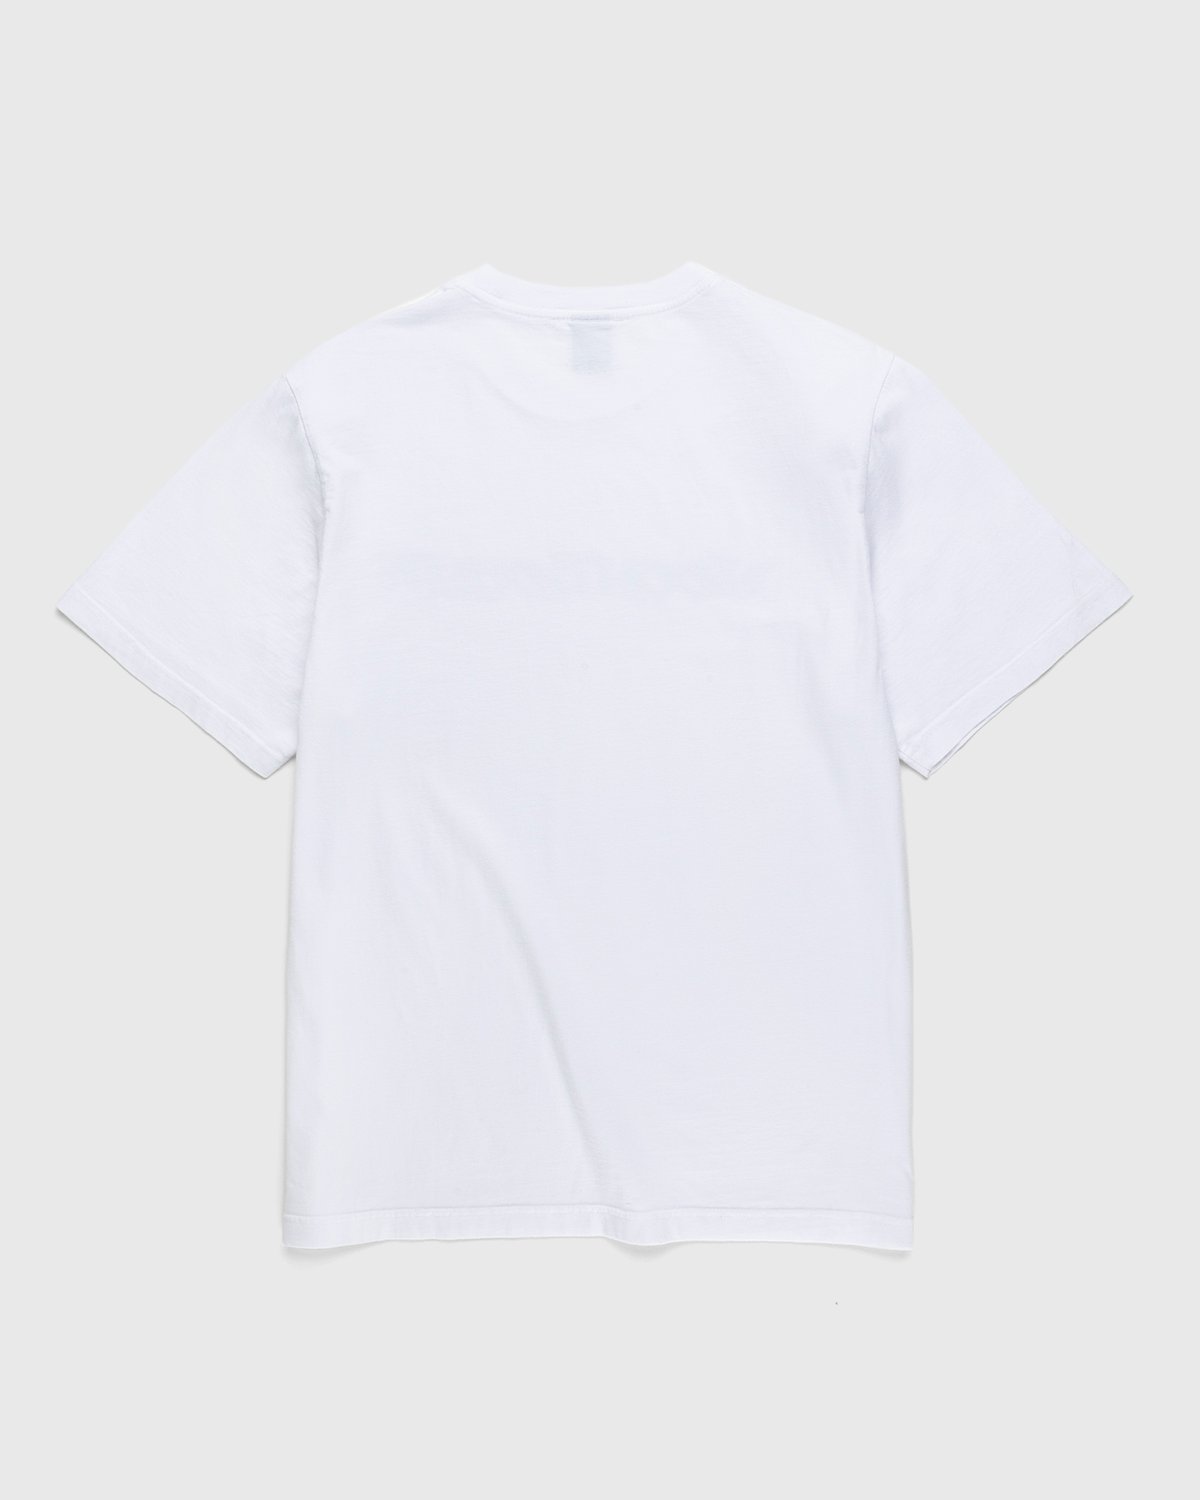 Noon Goons - Sketchy Tshirt White - Clothing - White - Image 2